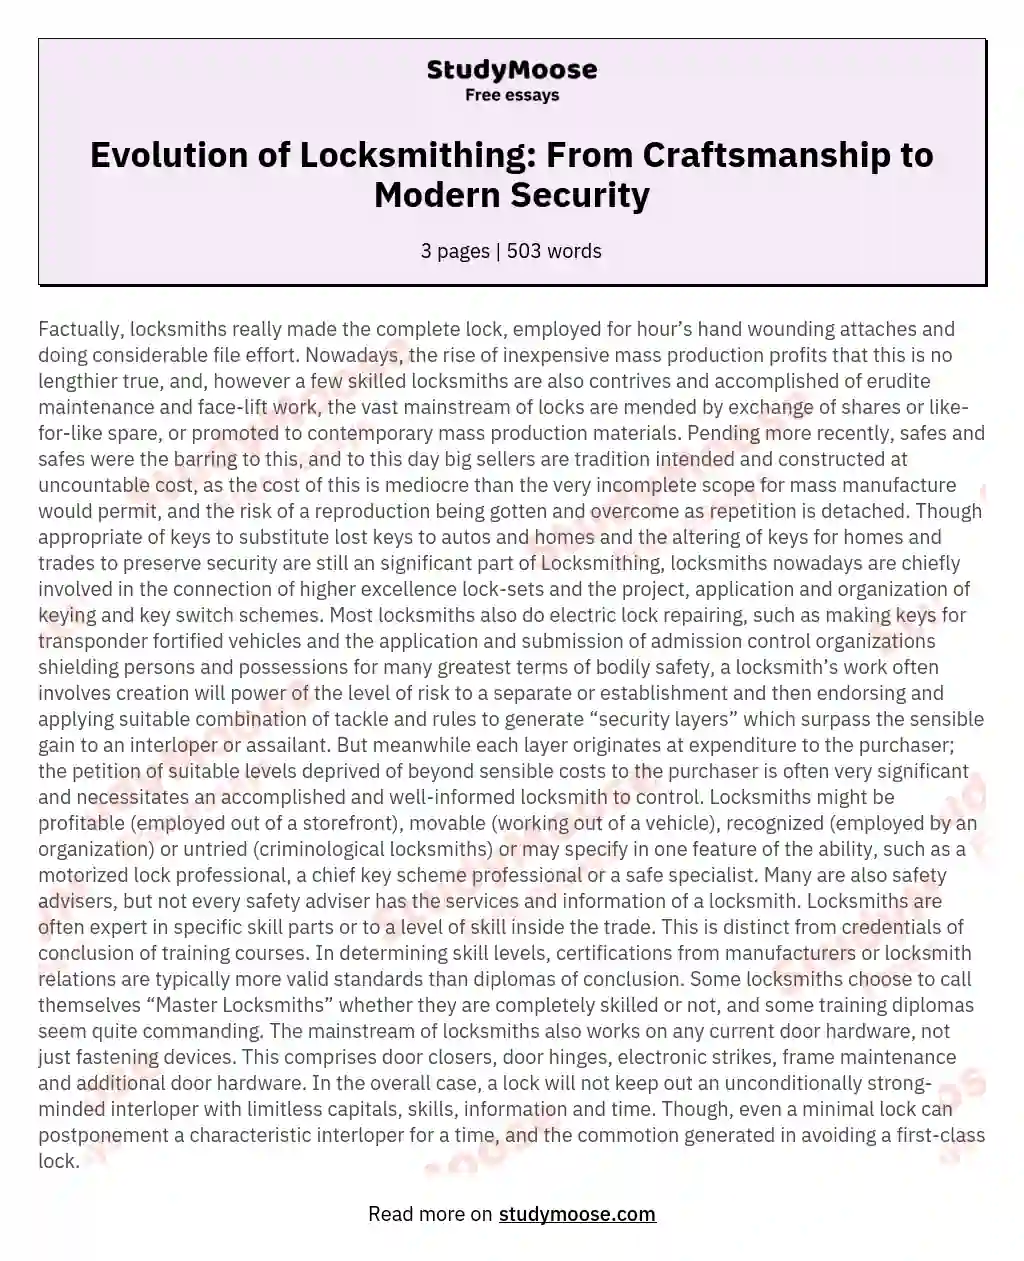 Evolution of Locksmithing: From Craftsmanship to Modern Security essay